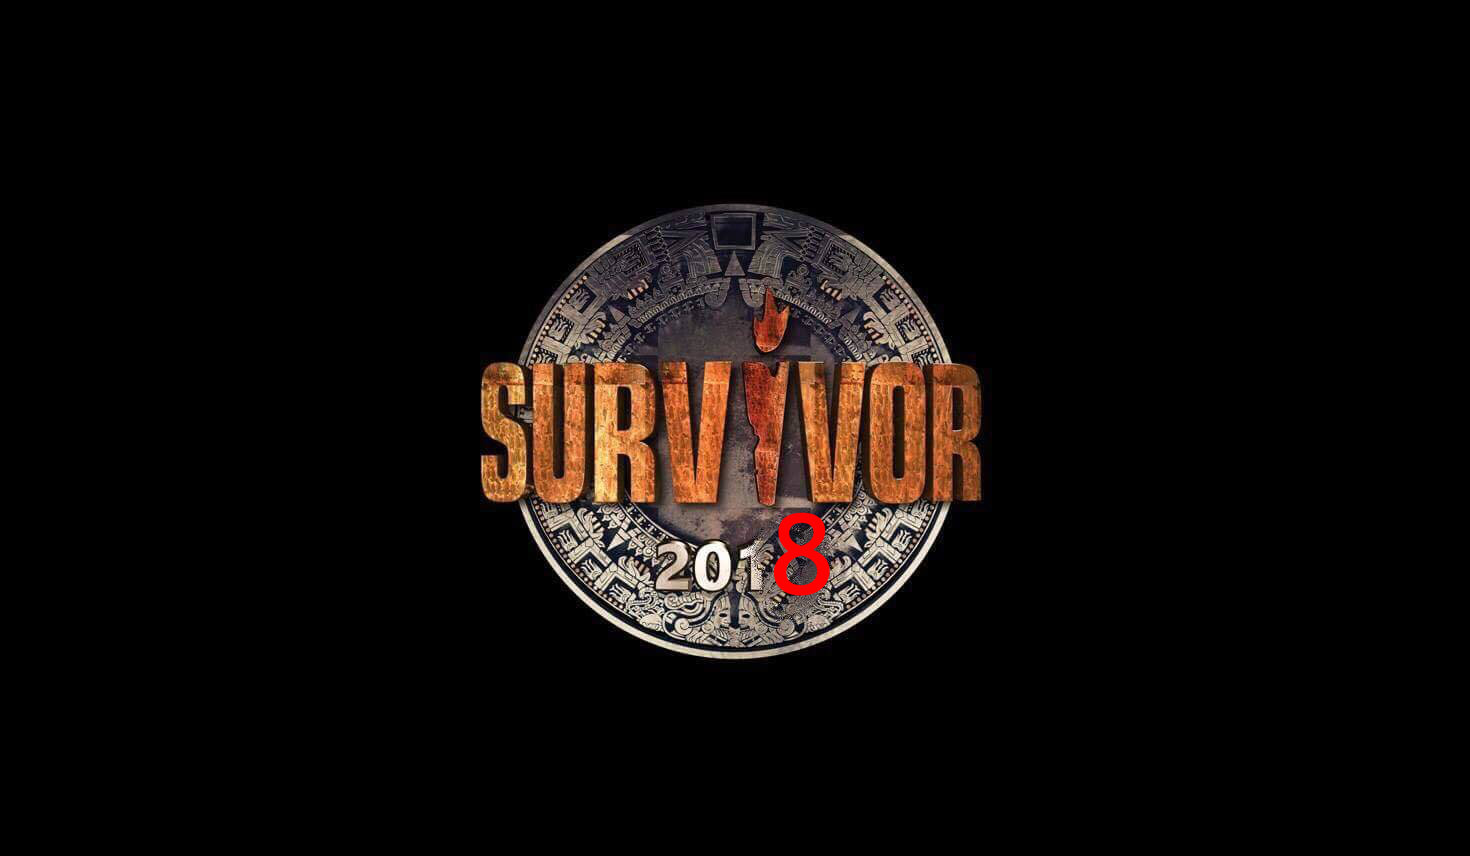 Survivor2: Ανατροπή στον διαγωνισμό τραγουδιού! Δύο νικητές και φέτος- Θα υπάρξει τρίτο για να πάνε;